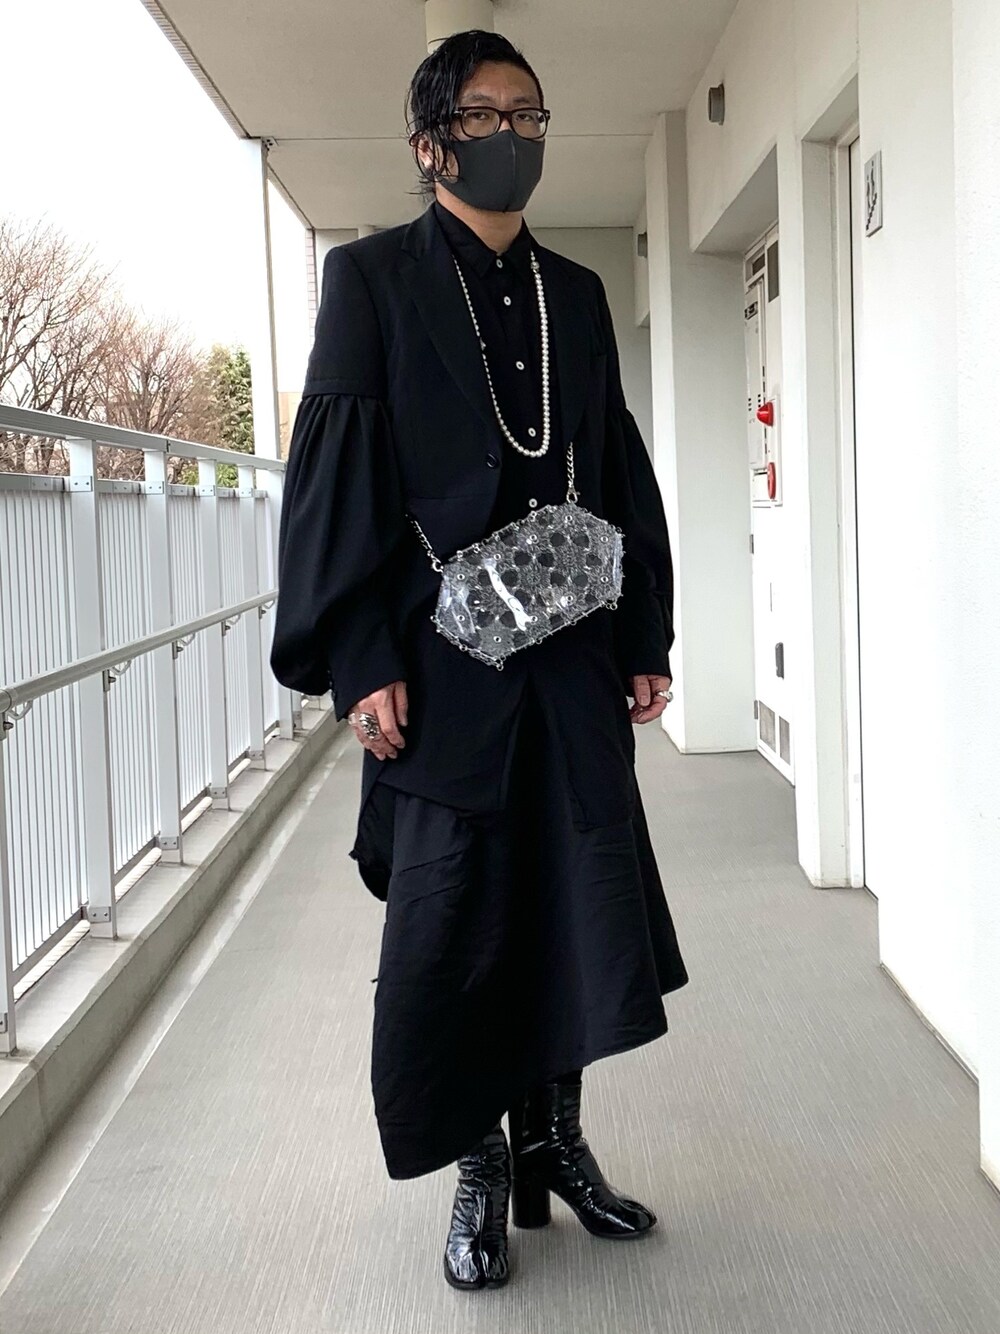 noir kei ninomiyaのバッグを使った人気ファッションコーディネート 